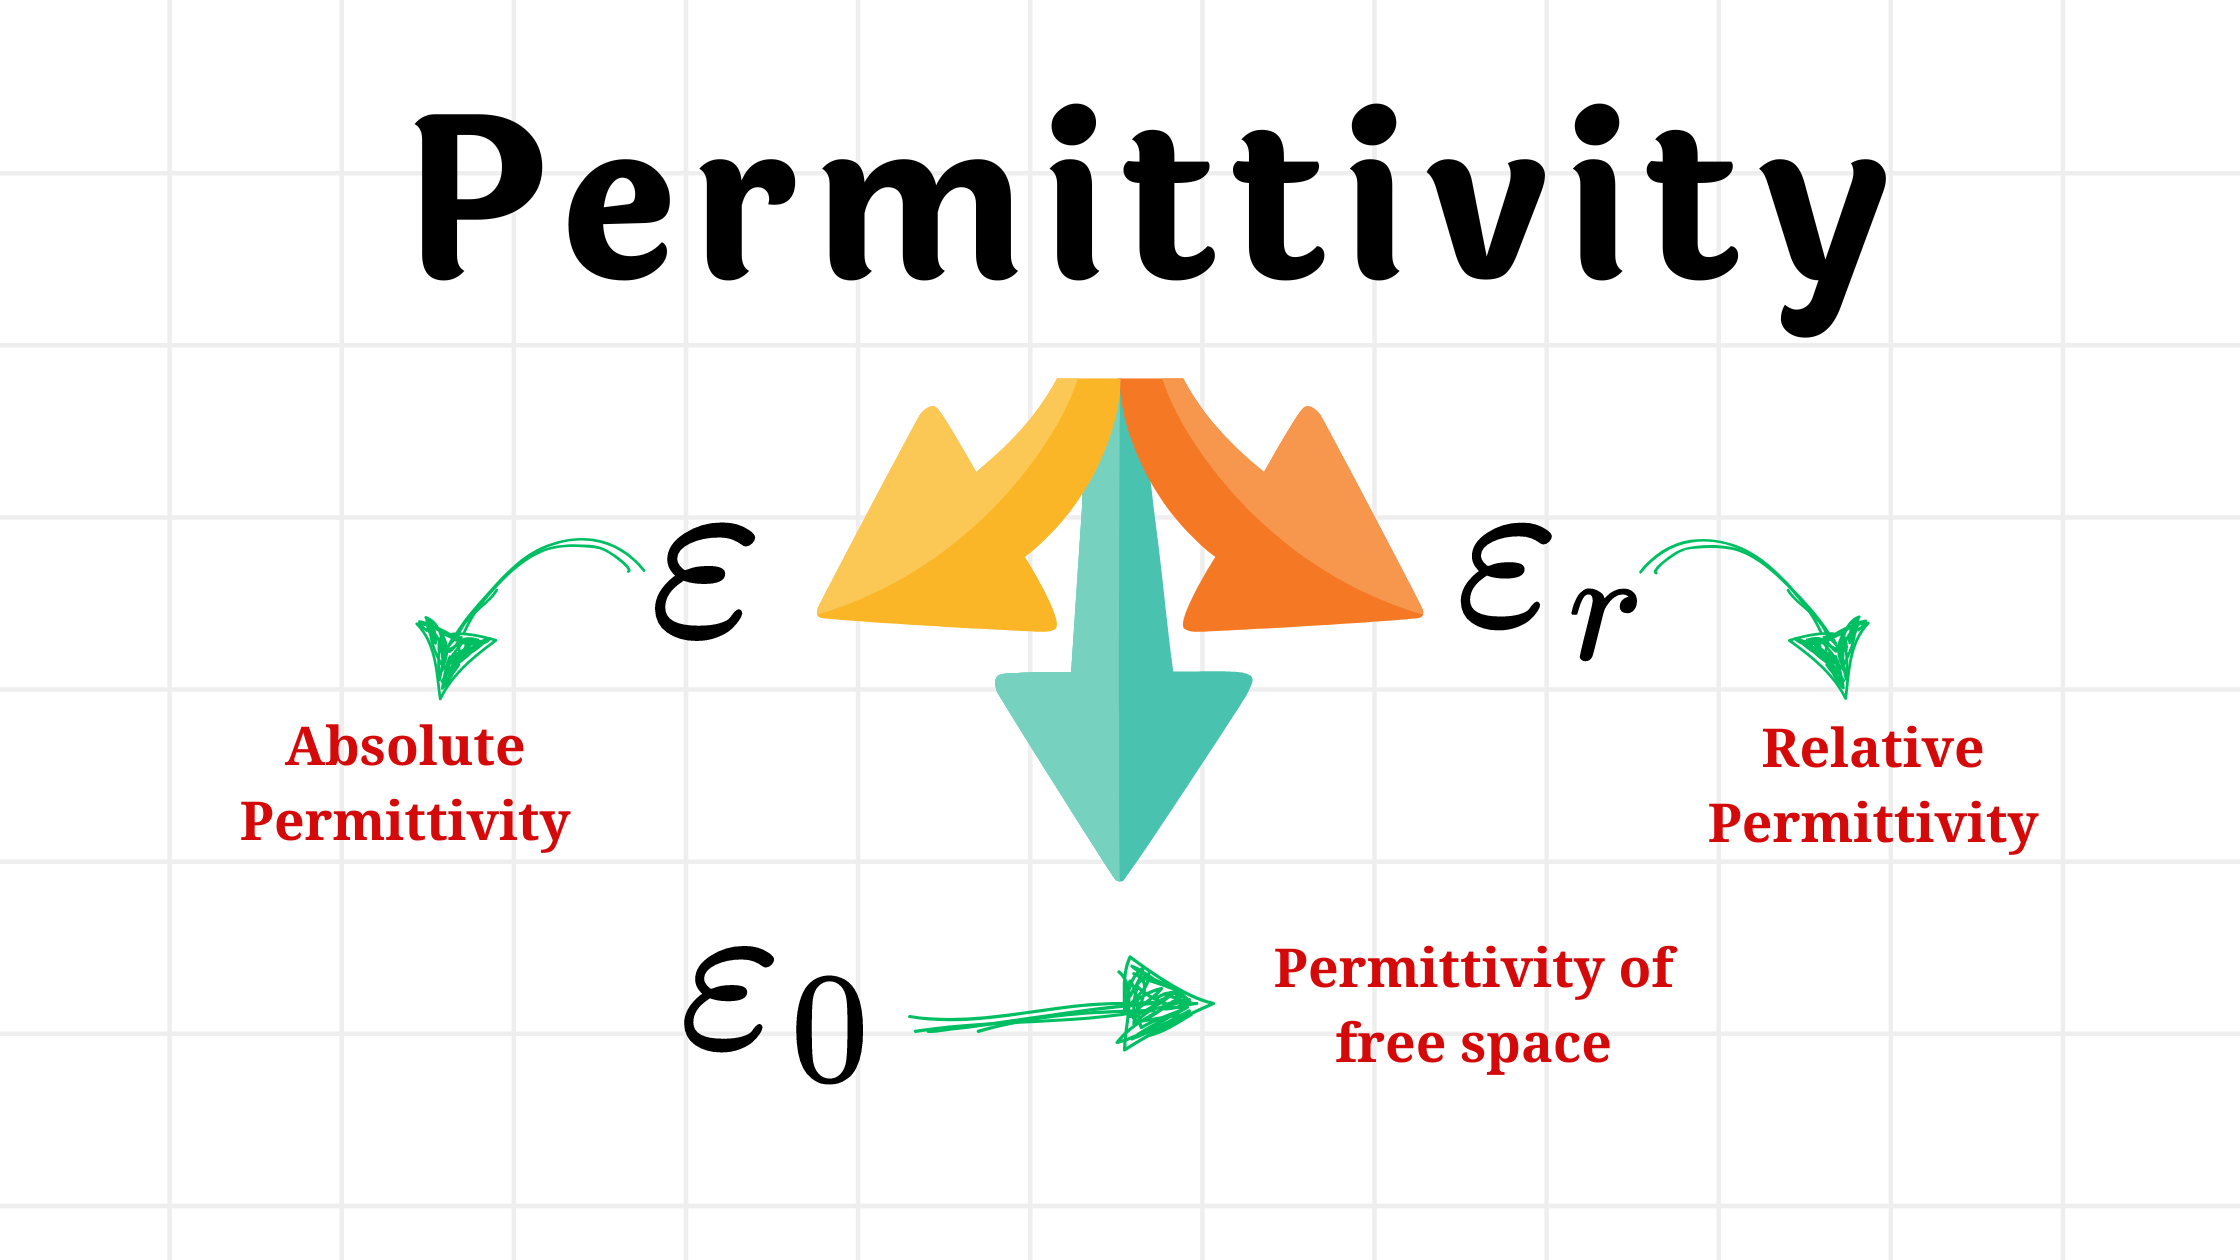 Relative permittivity